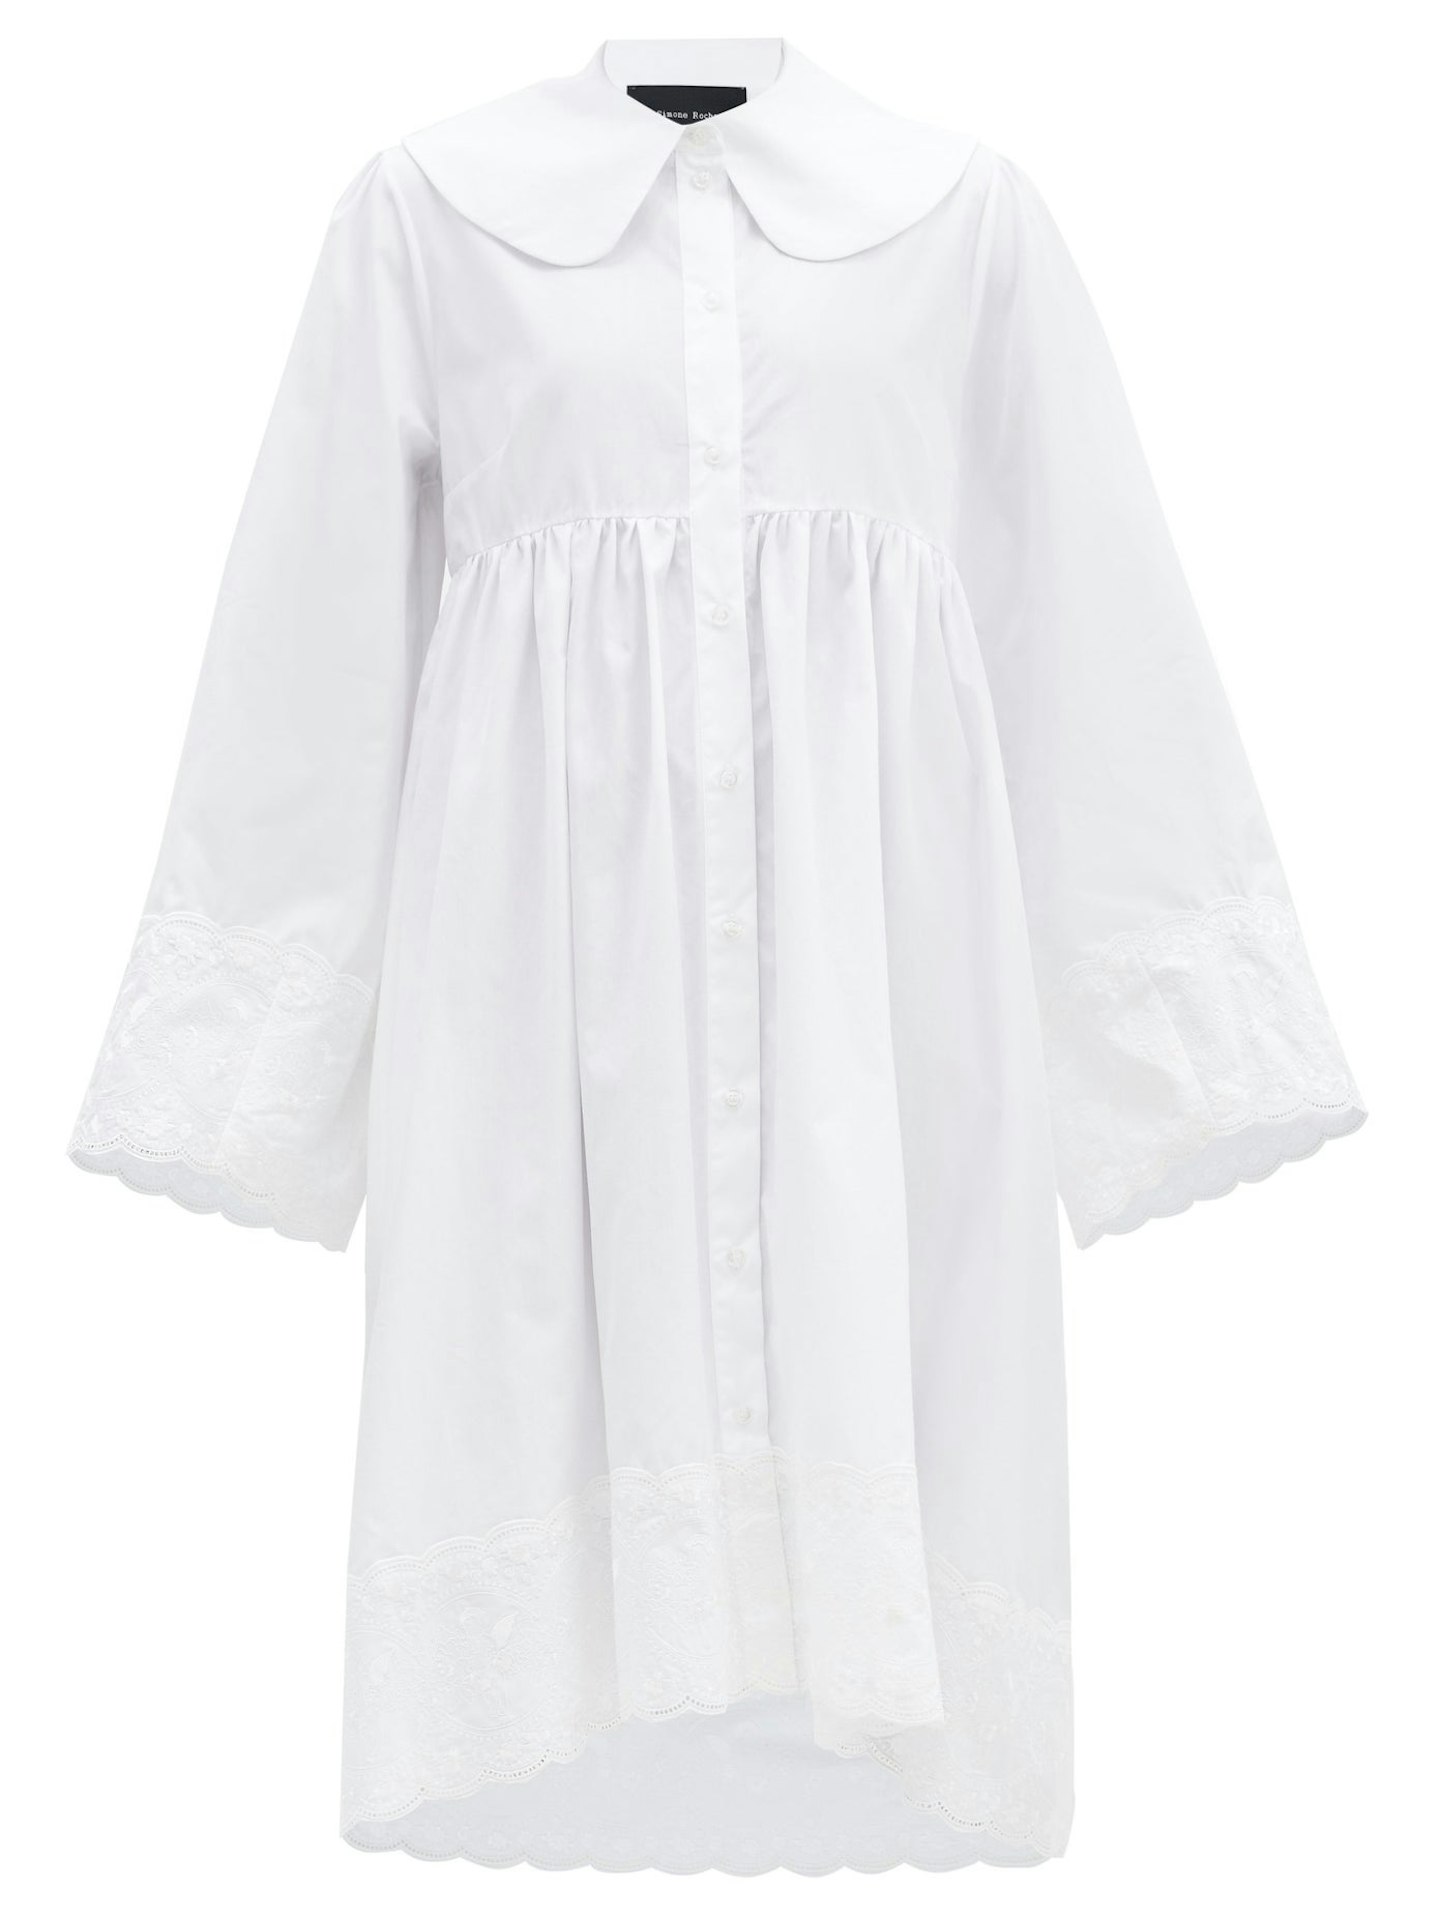 Simone Rocha, Floral-Embroidered Cotton-Poplin Shirt Dress, £695